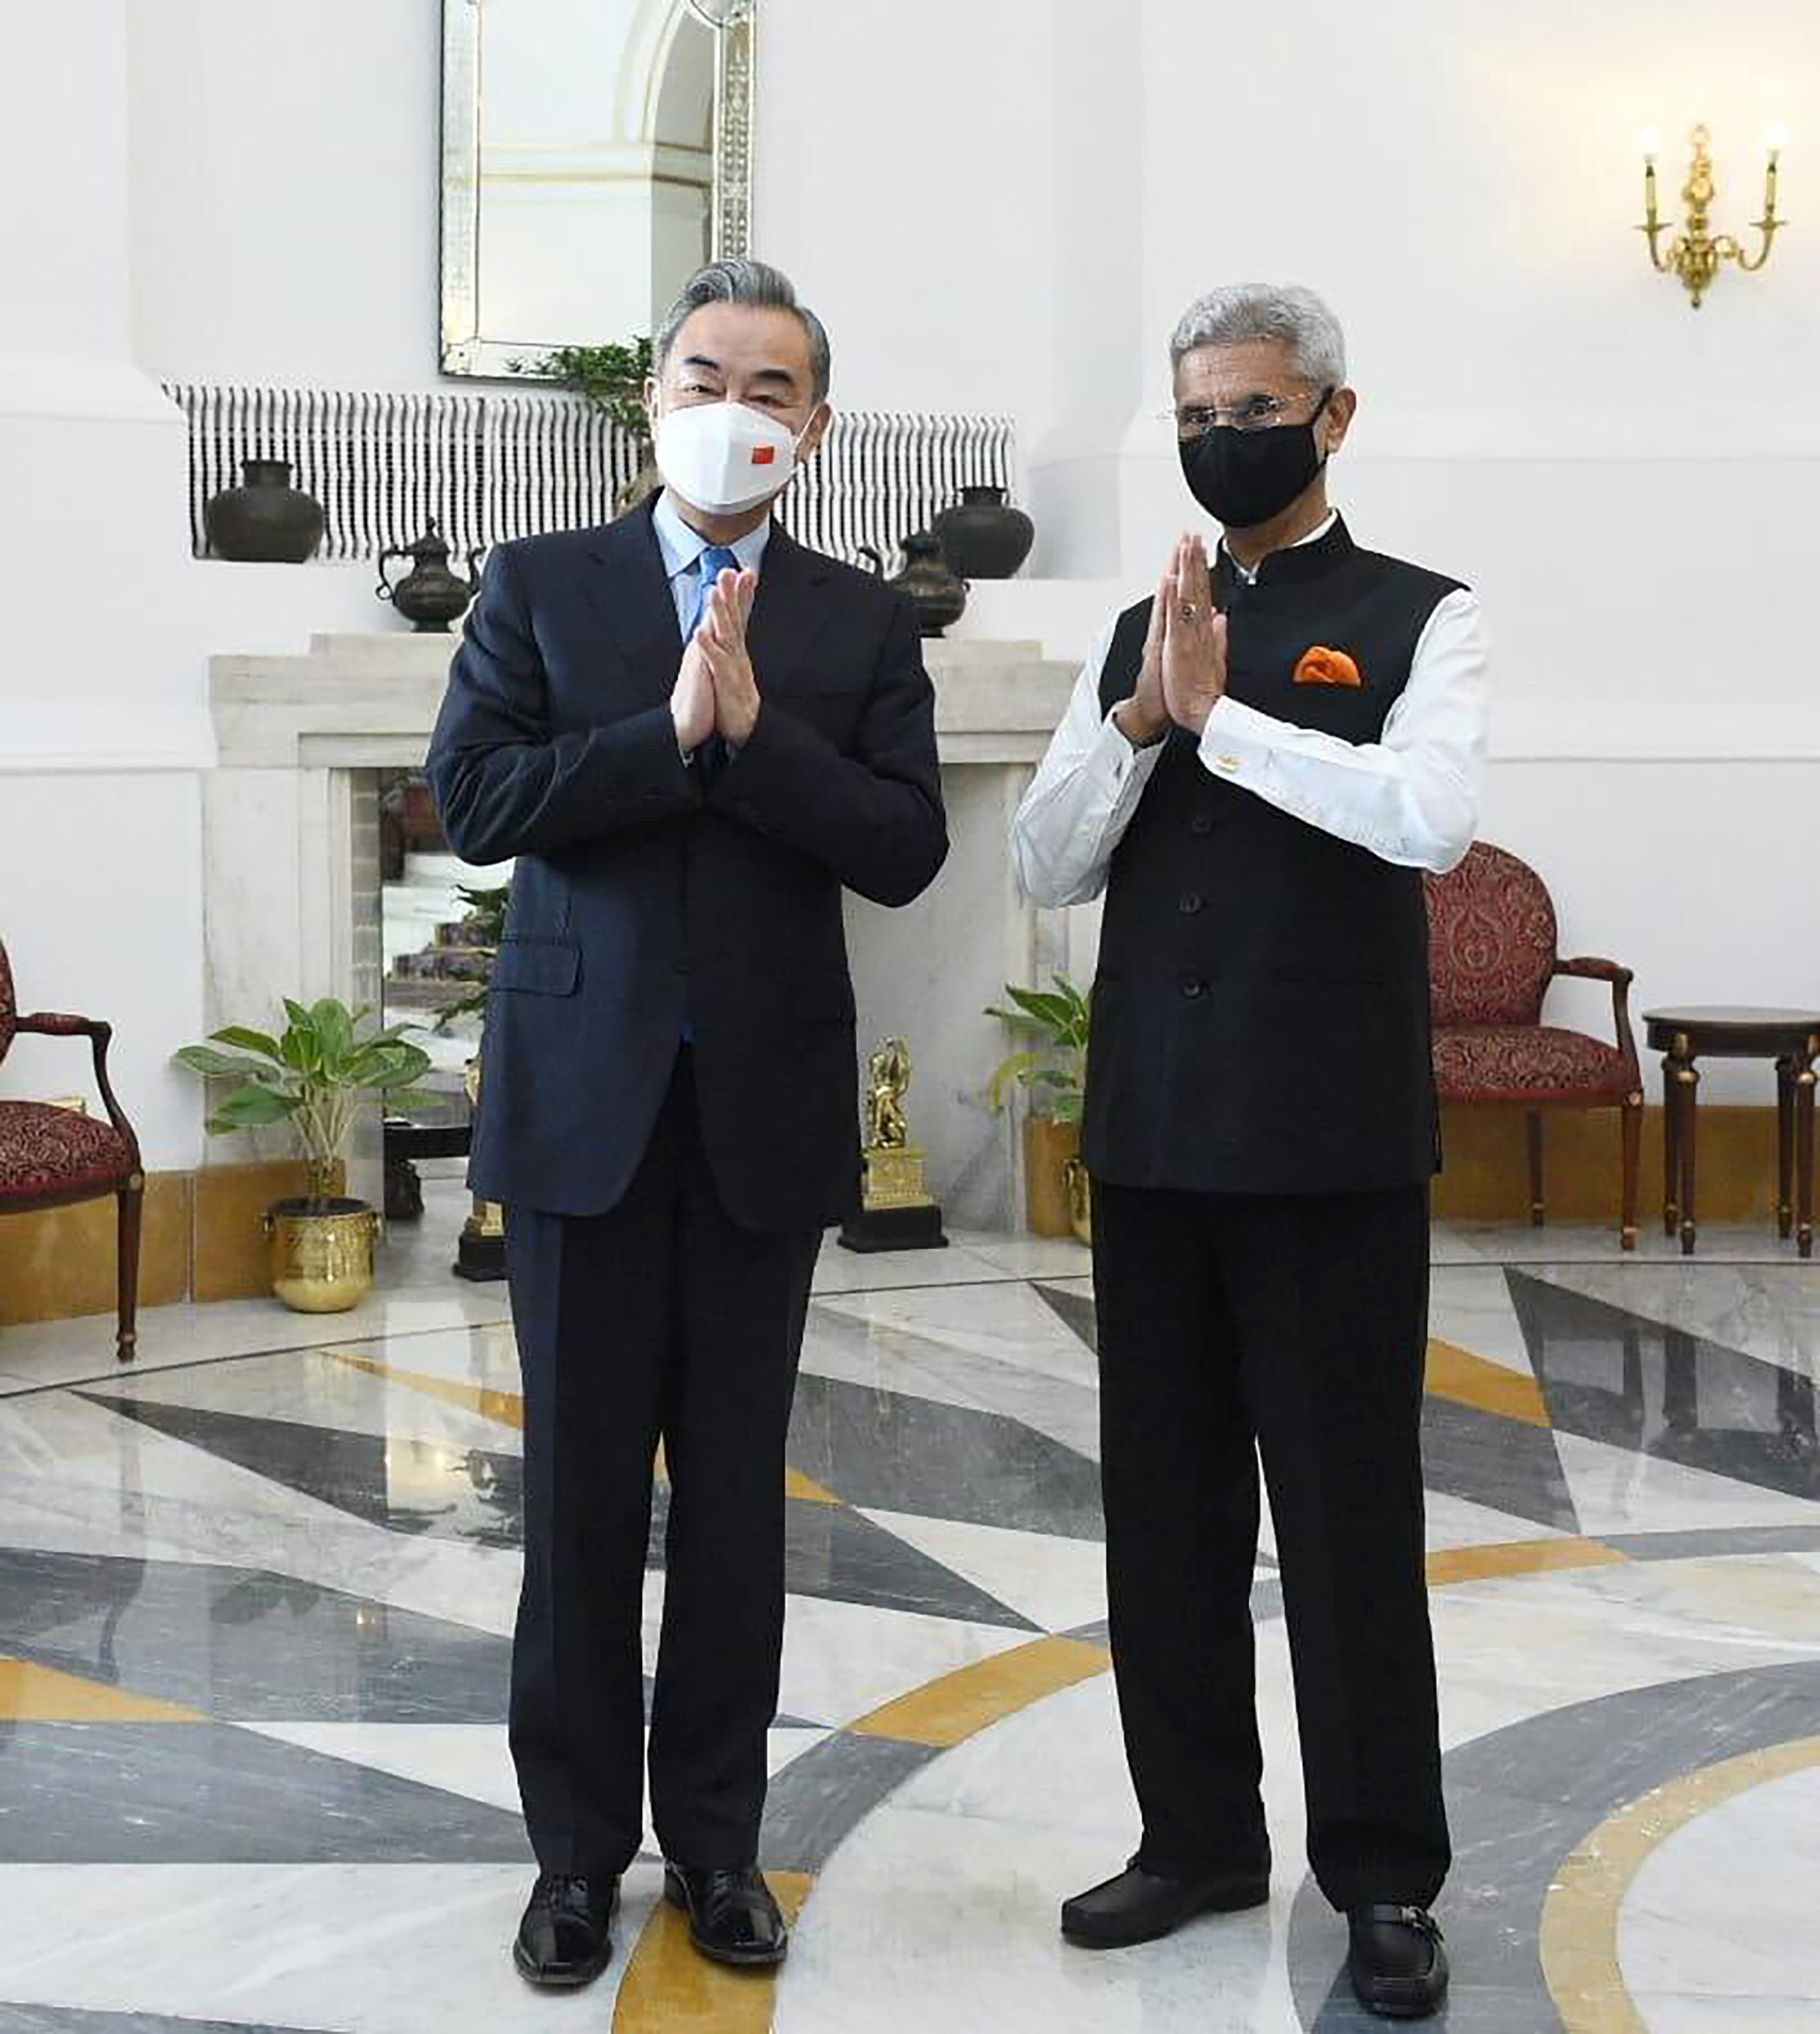 Subrahmanyam Jaishankar, India’s external affairs minister, poses with Chinese counterpart Wang Yi before their meeting in New Delhi. Photo: AP